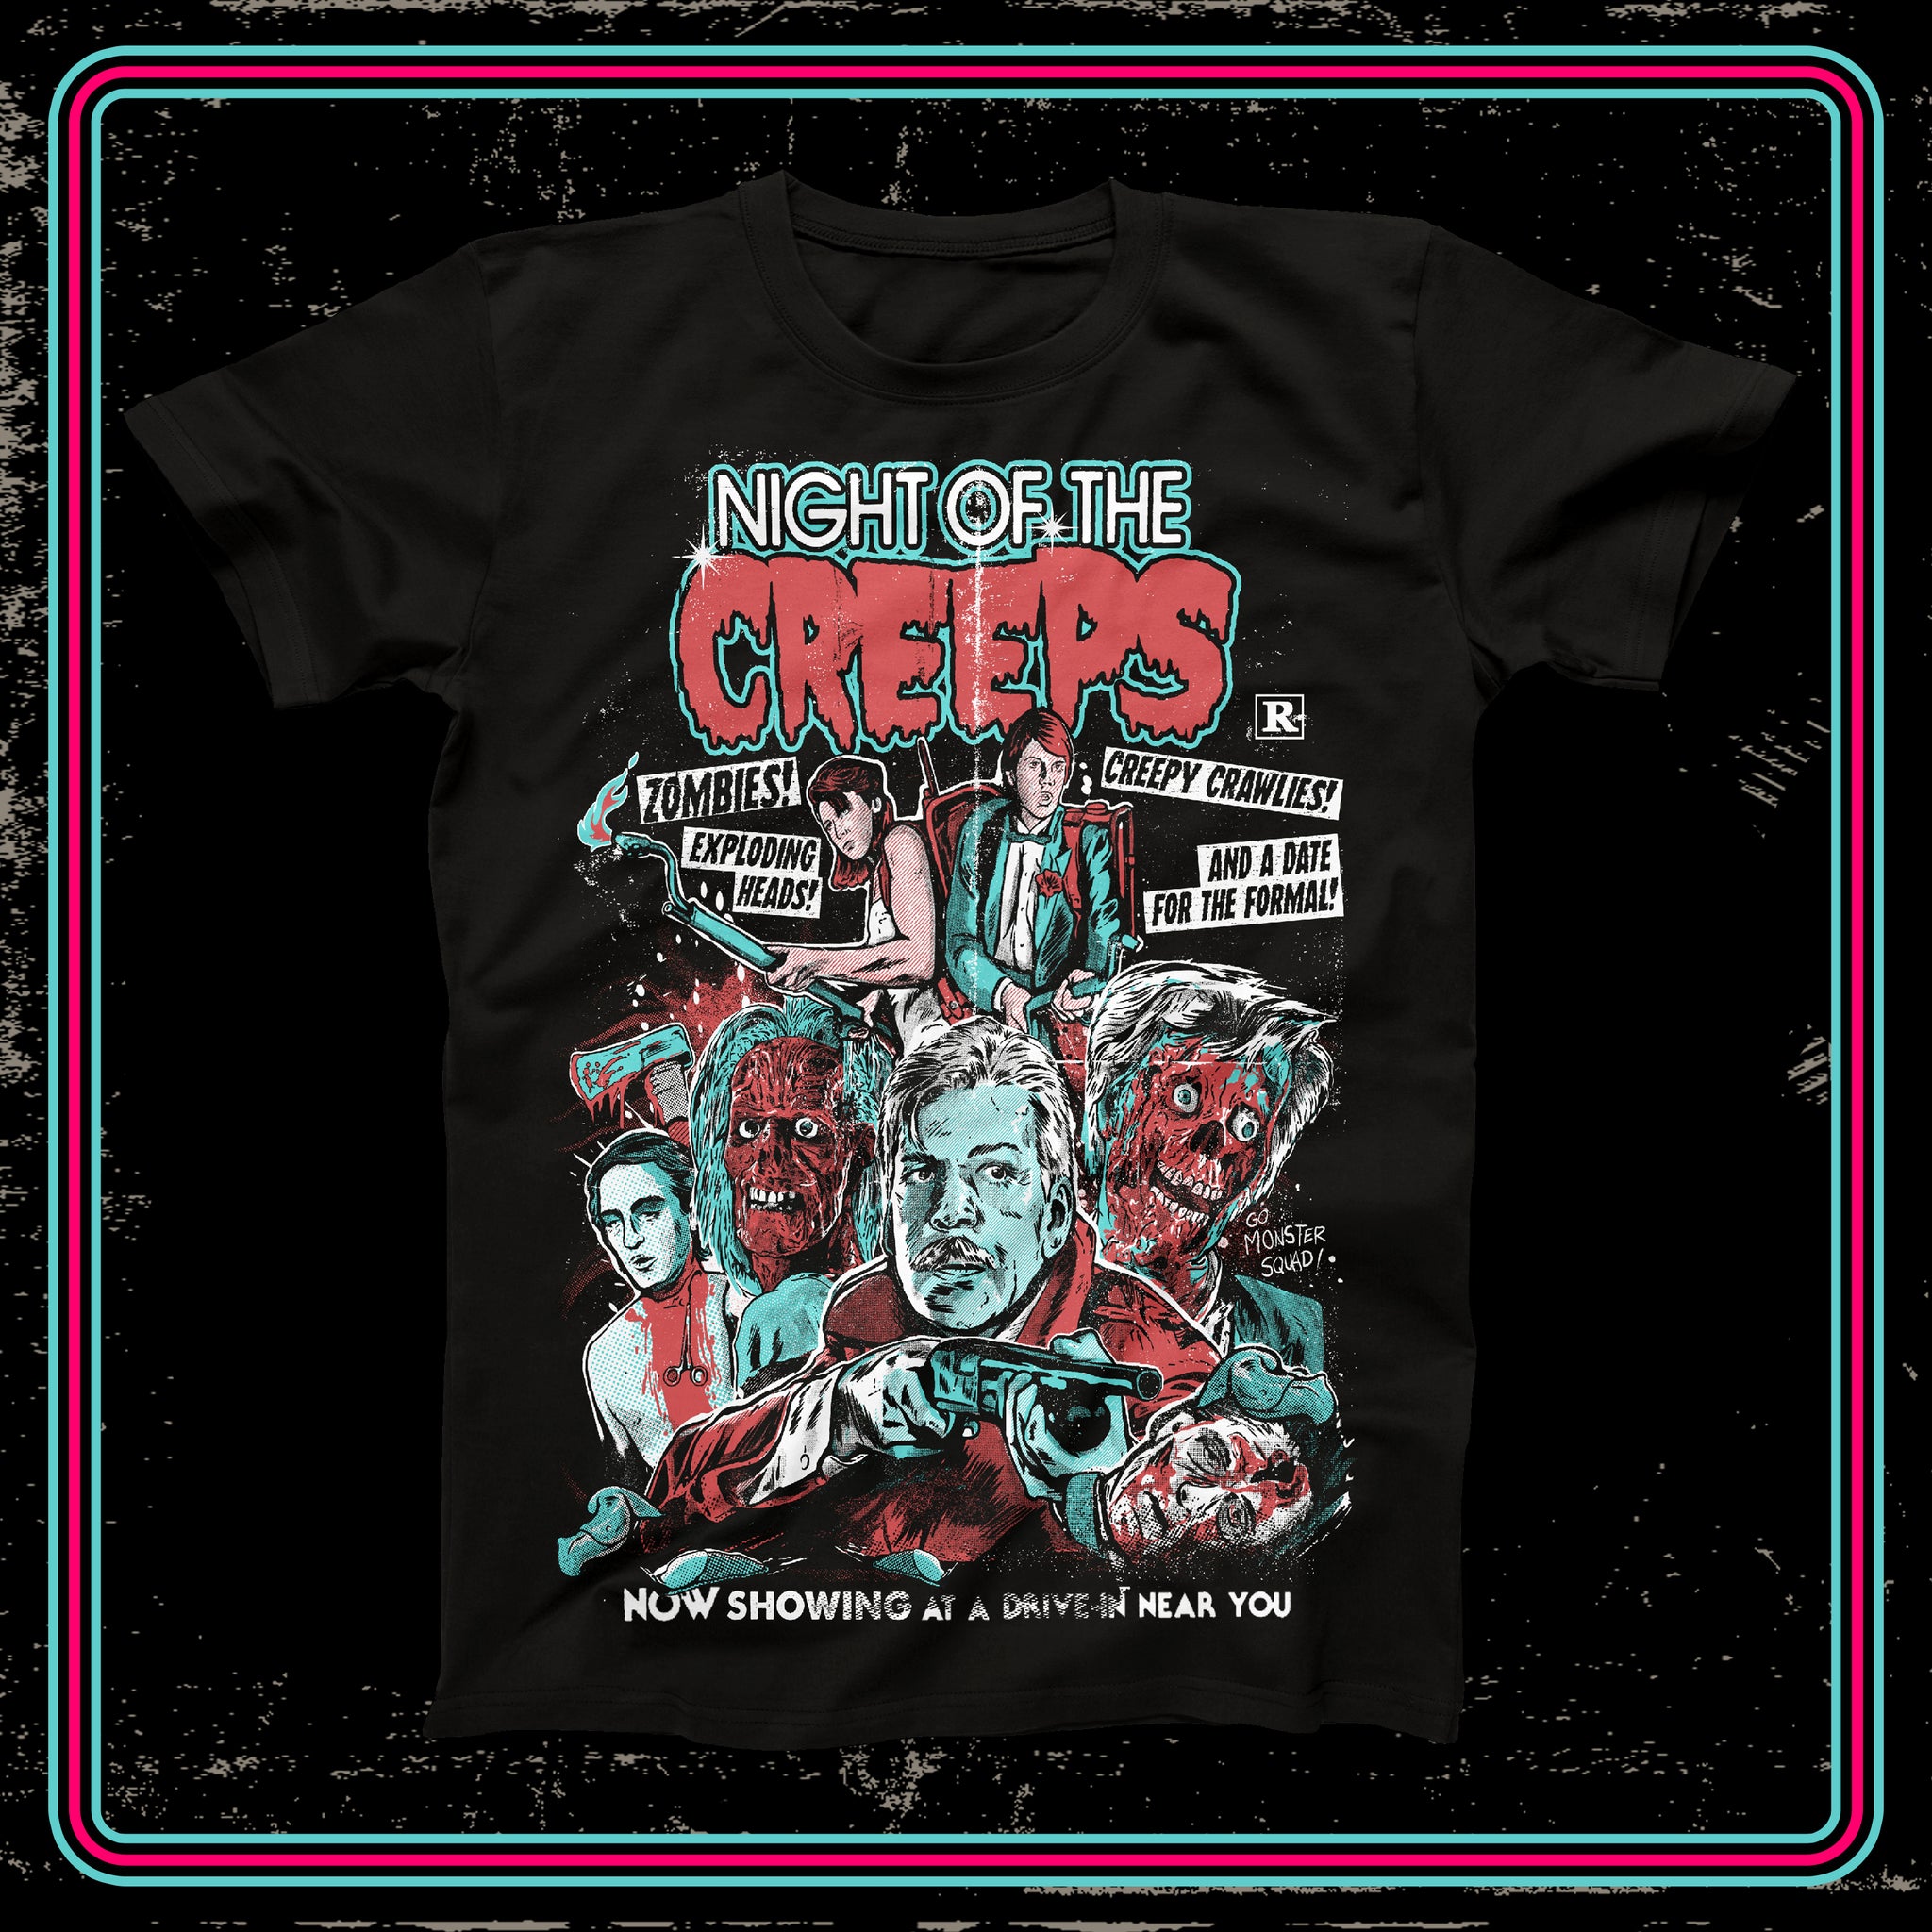 Night of the Creeps - Regular tee